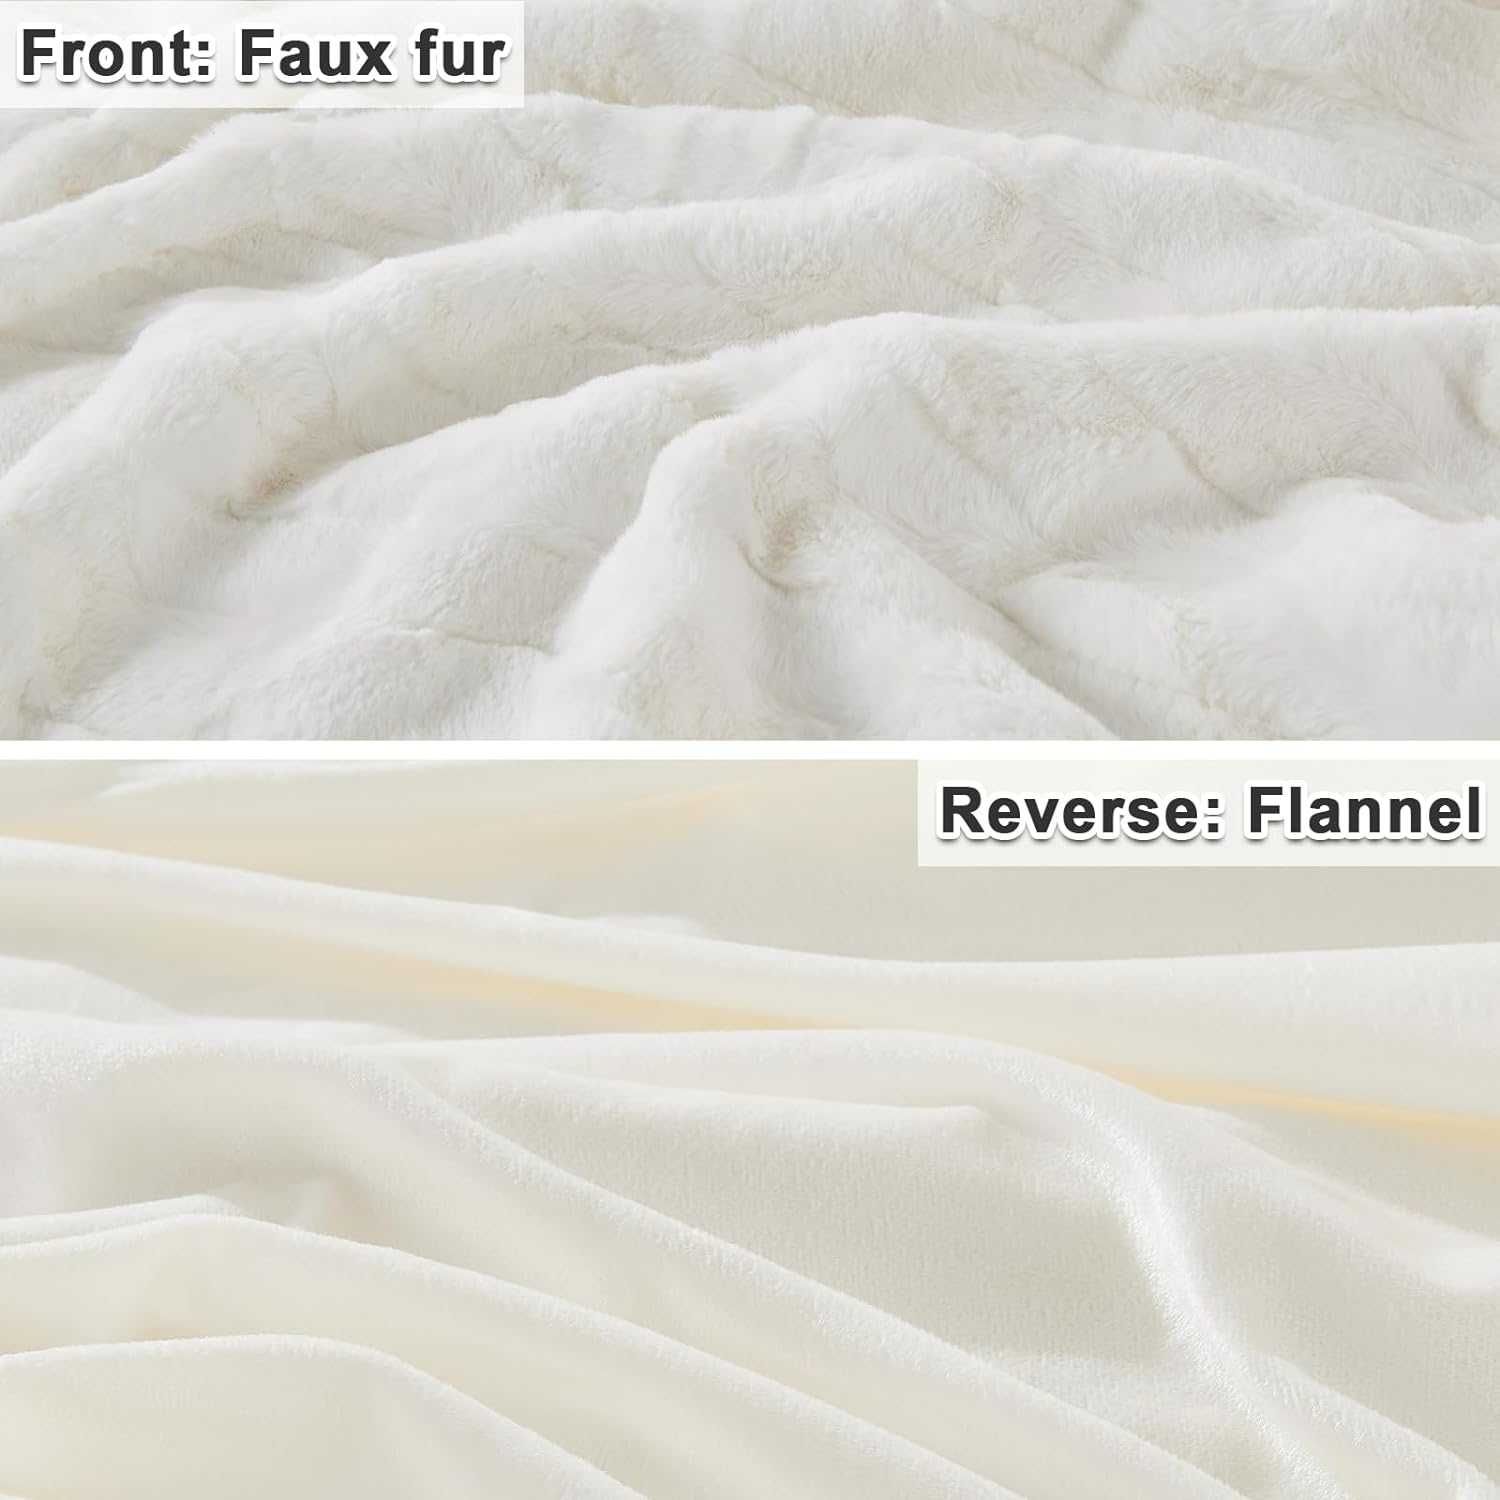 Одеяло Qucover, бяло пухкаво одеяло с двустранен дизайн, 150x200 см